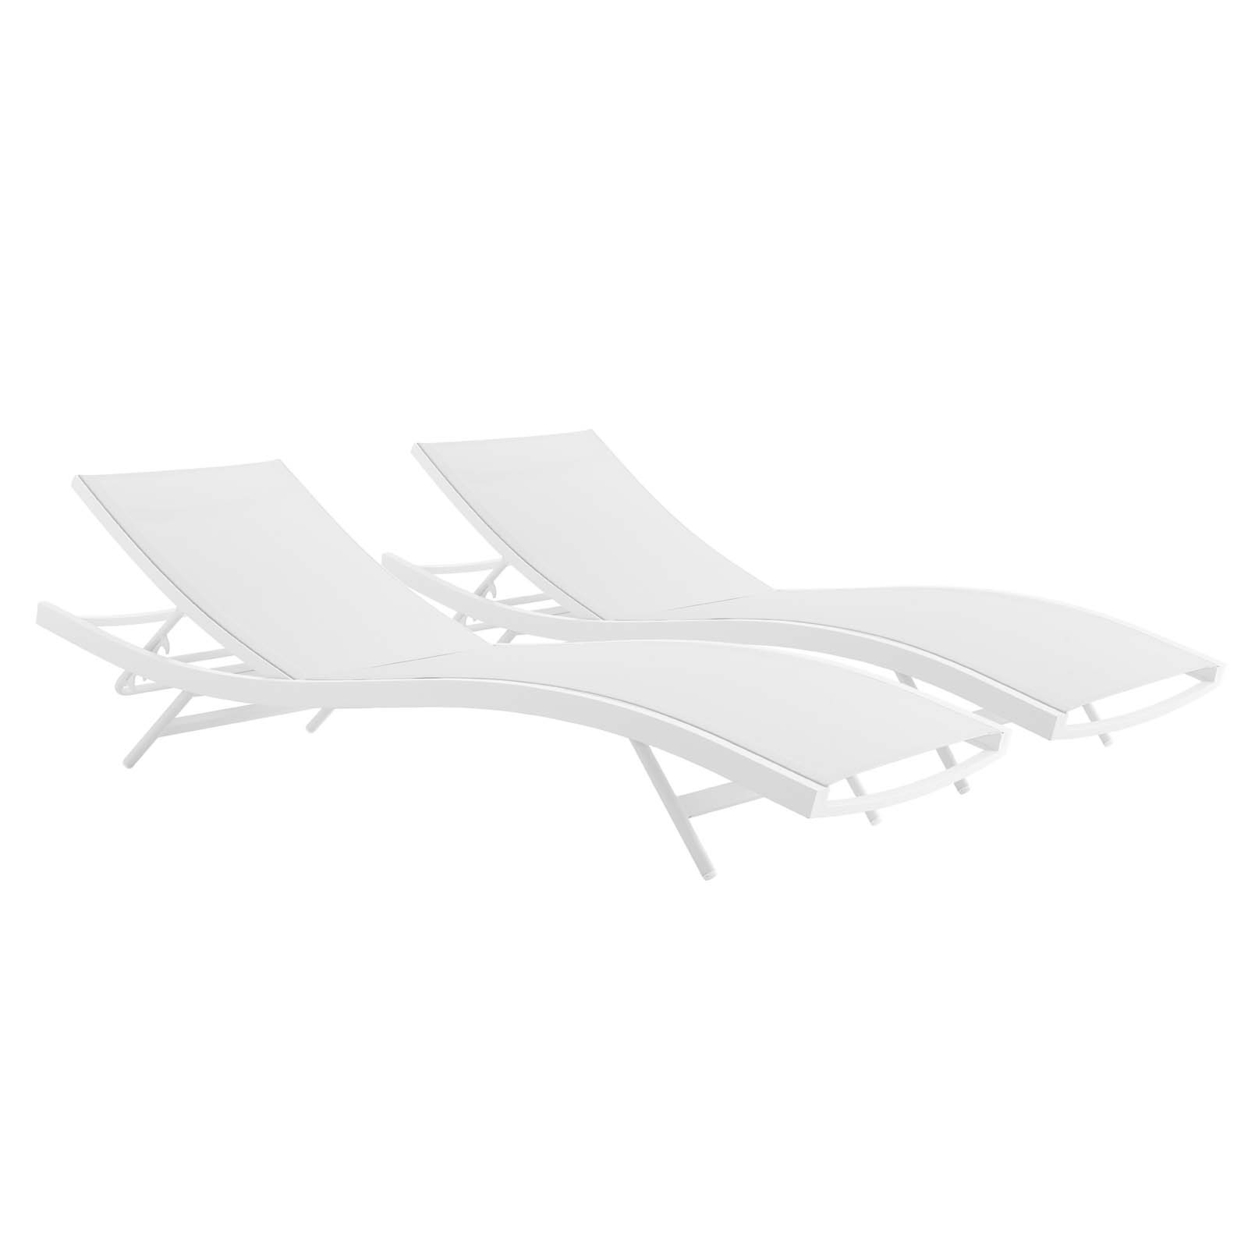 Glimpse Outdoor Patio Mesh Chaise Lounge Set Of 2, White White